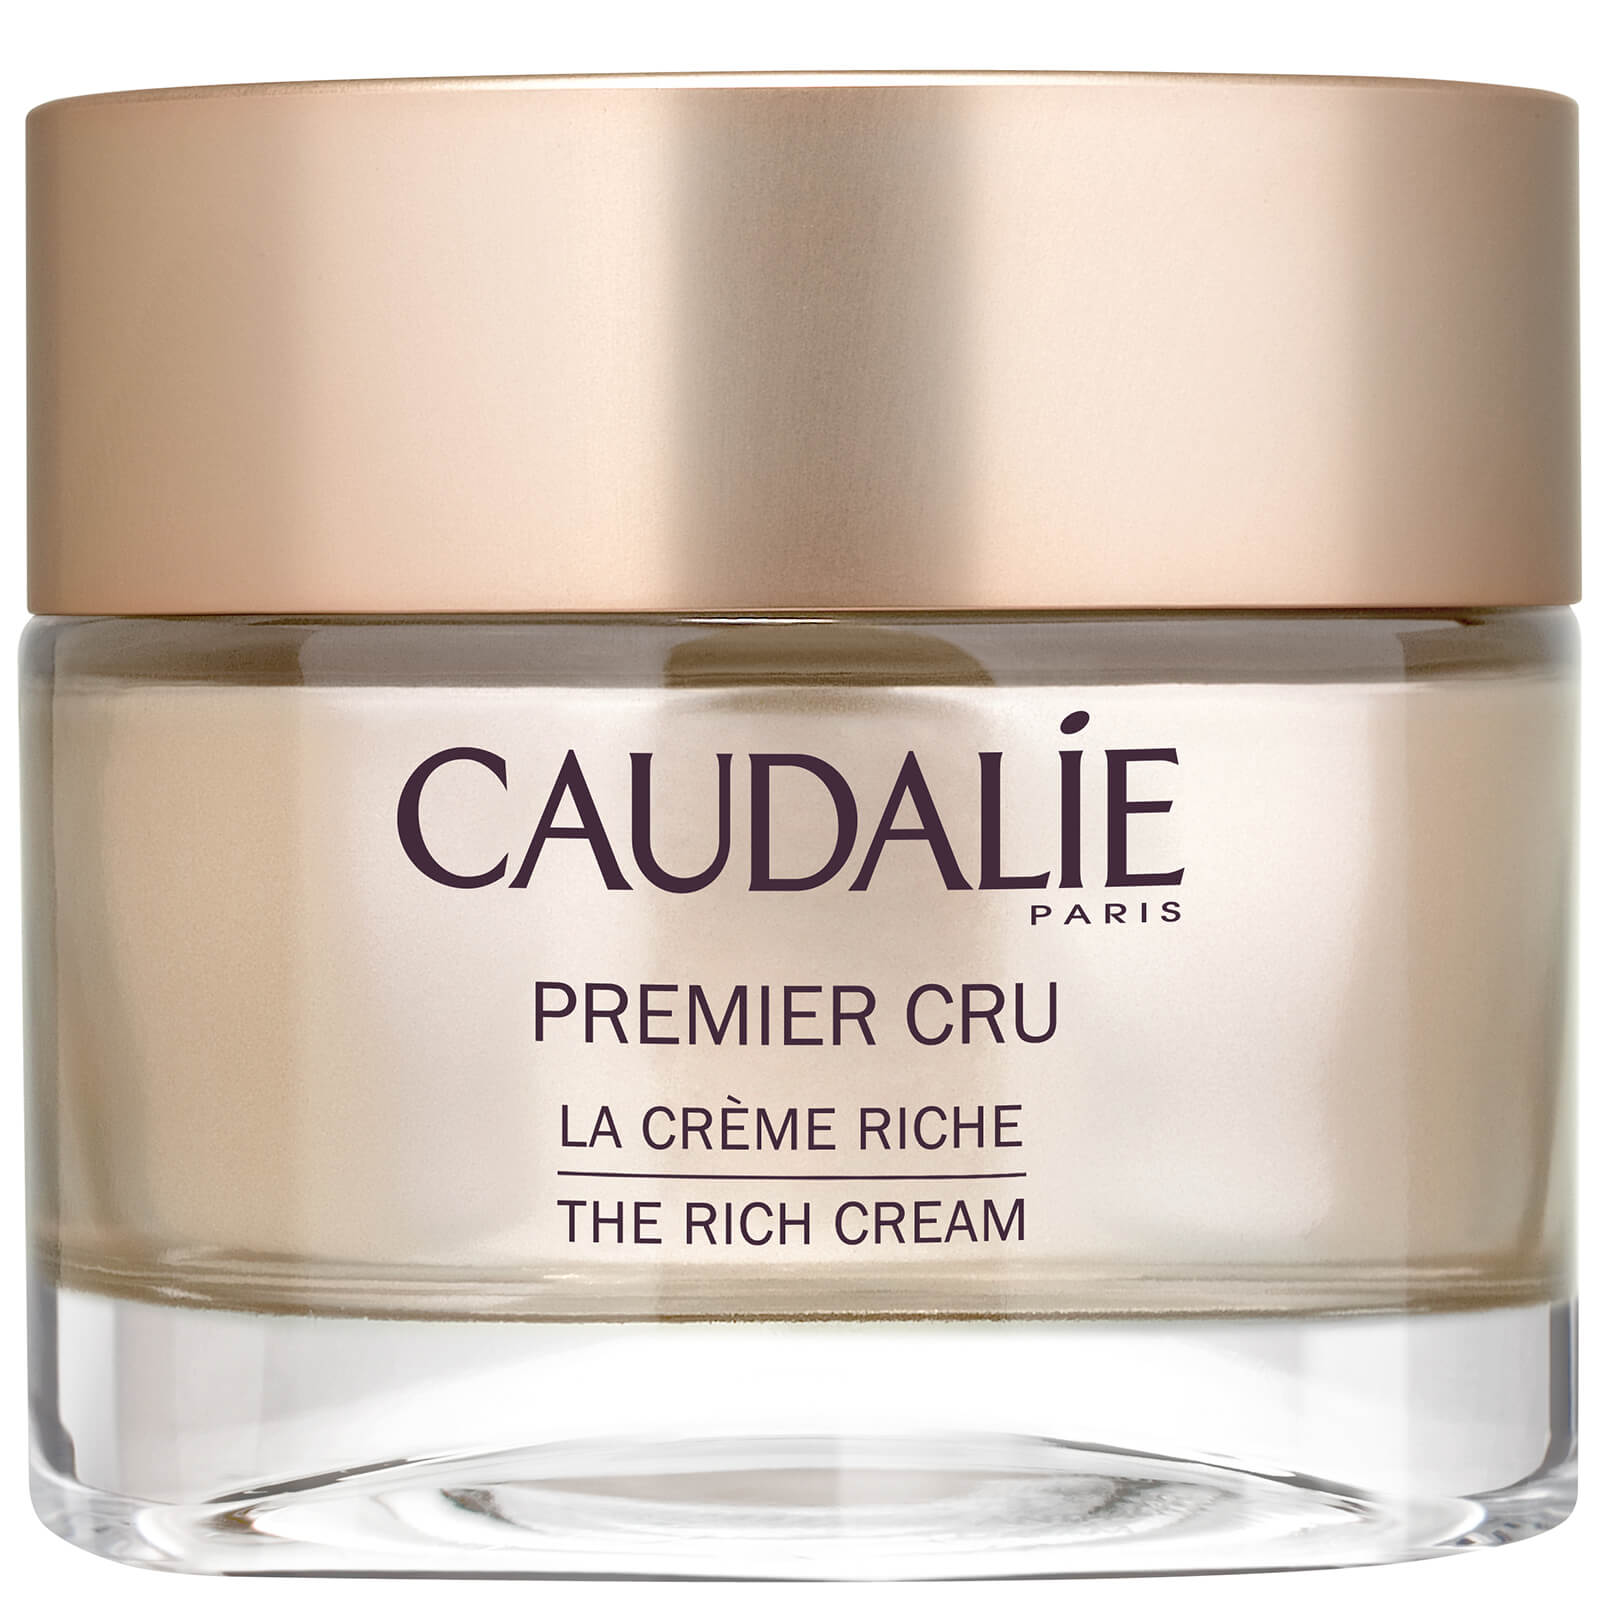 My Caudalie Premier Cru cream.